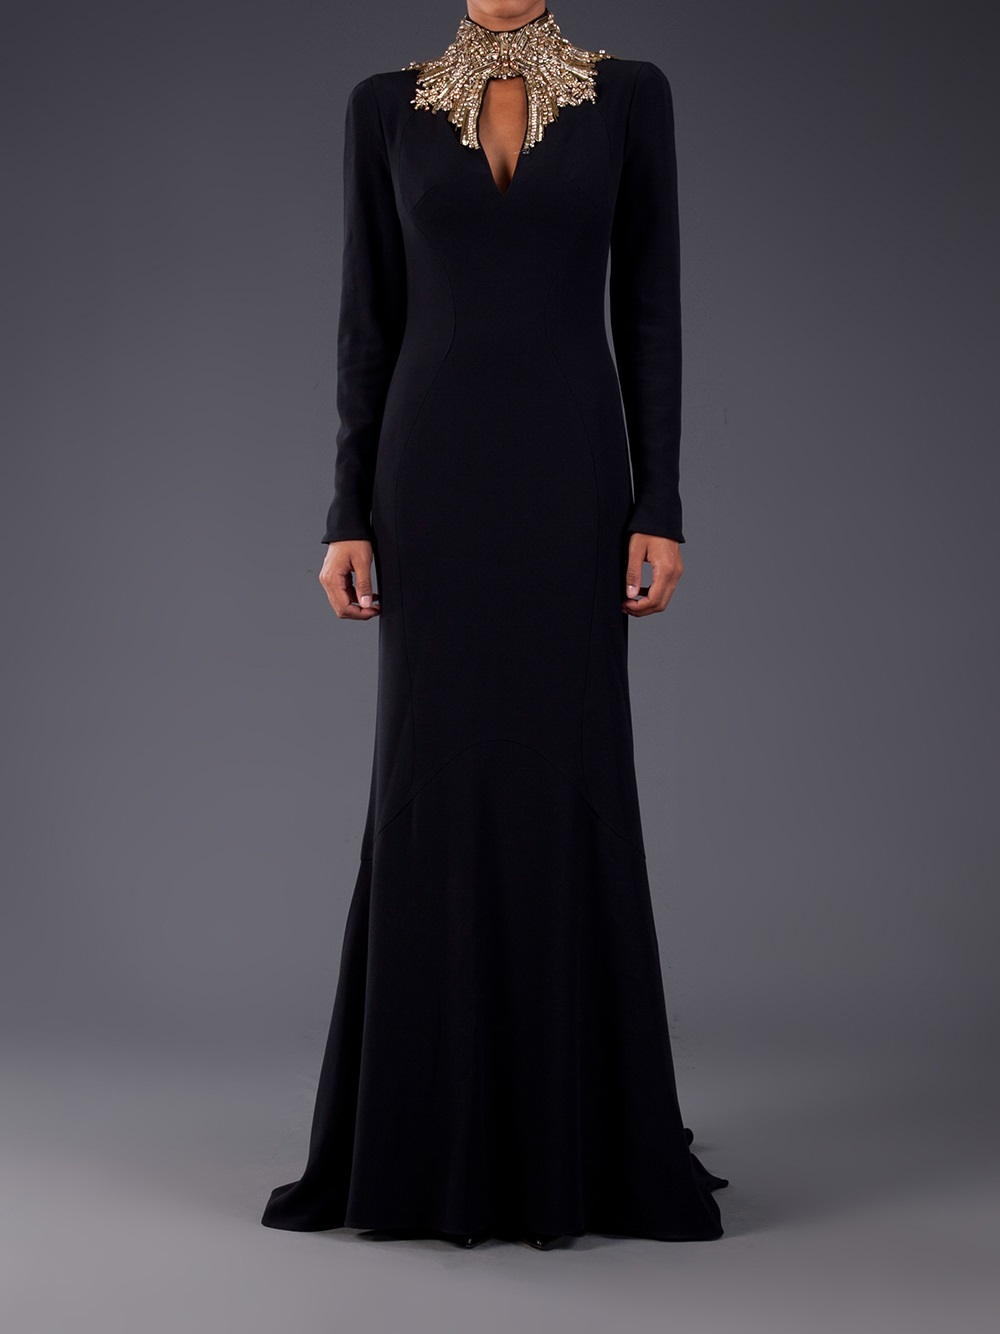 Alexander McQueen Dress Black